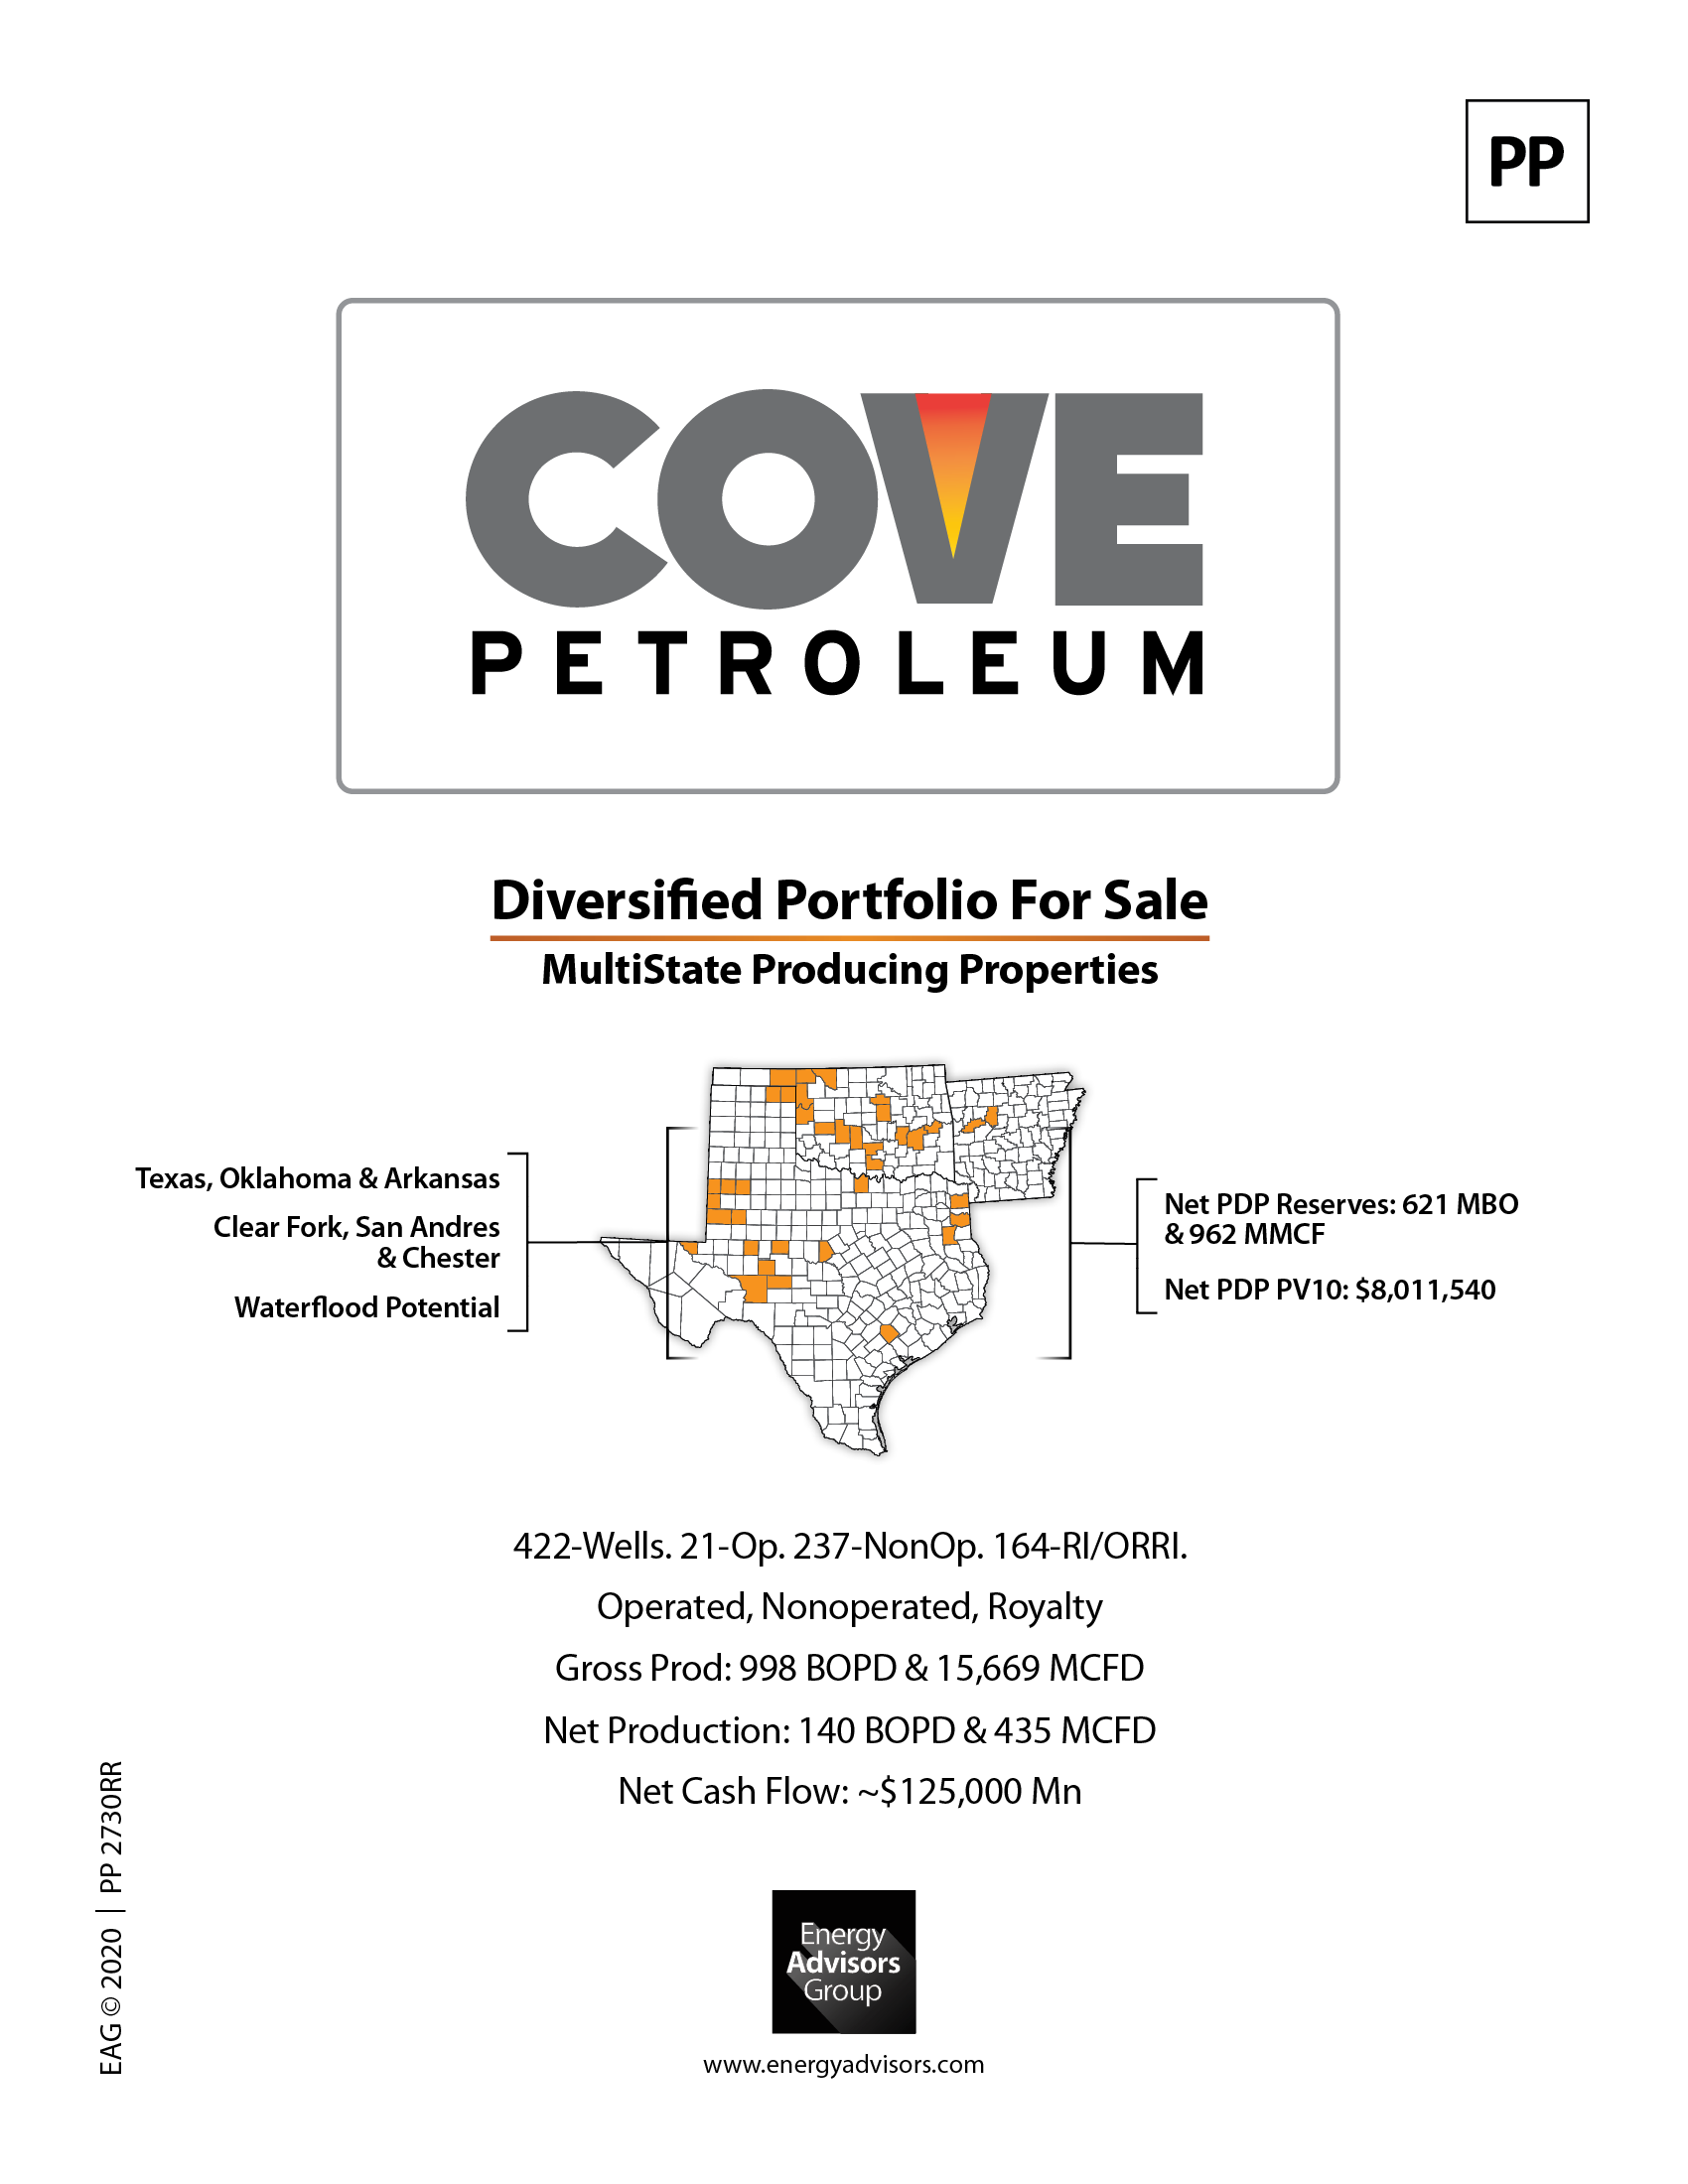 Marketed: Cove Petroleum Portfolio Across Major Oil Producing States